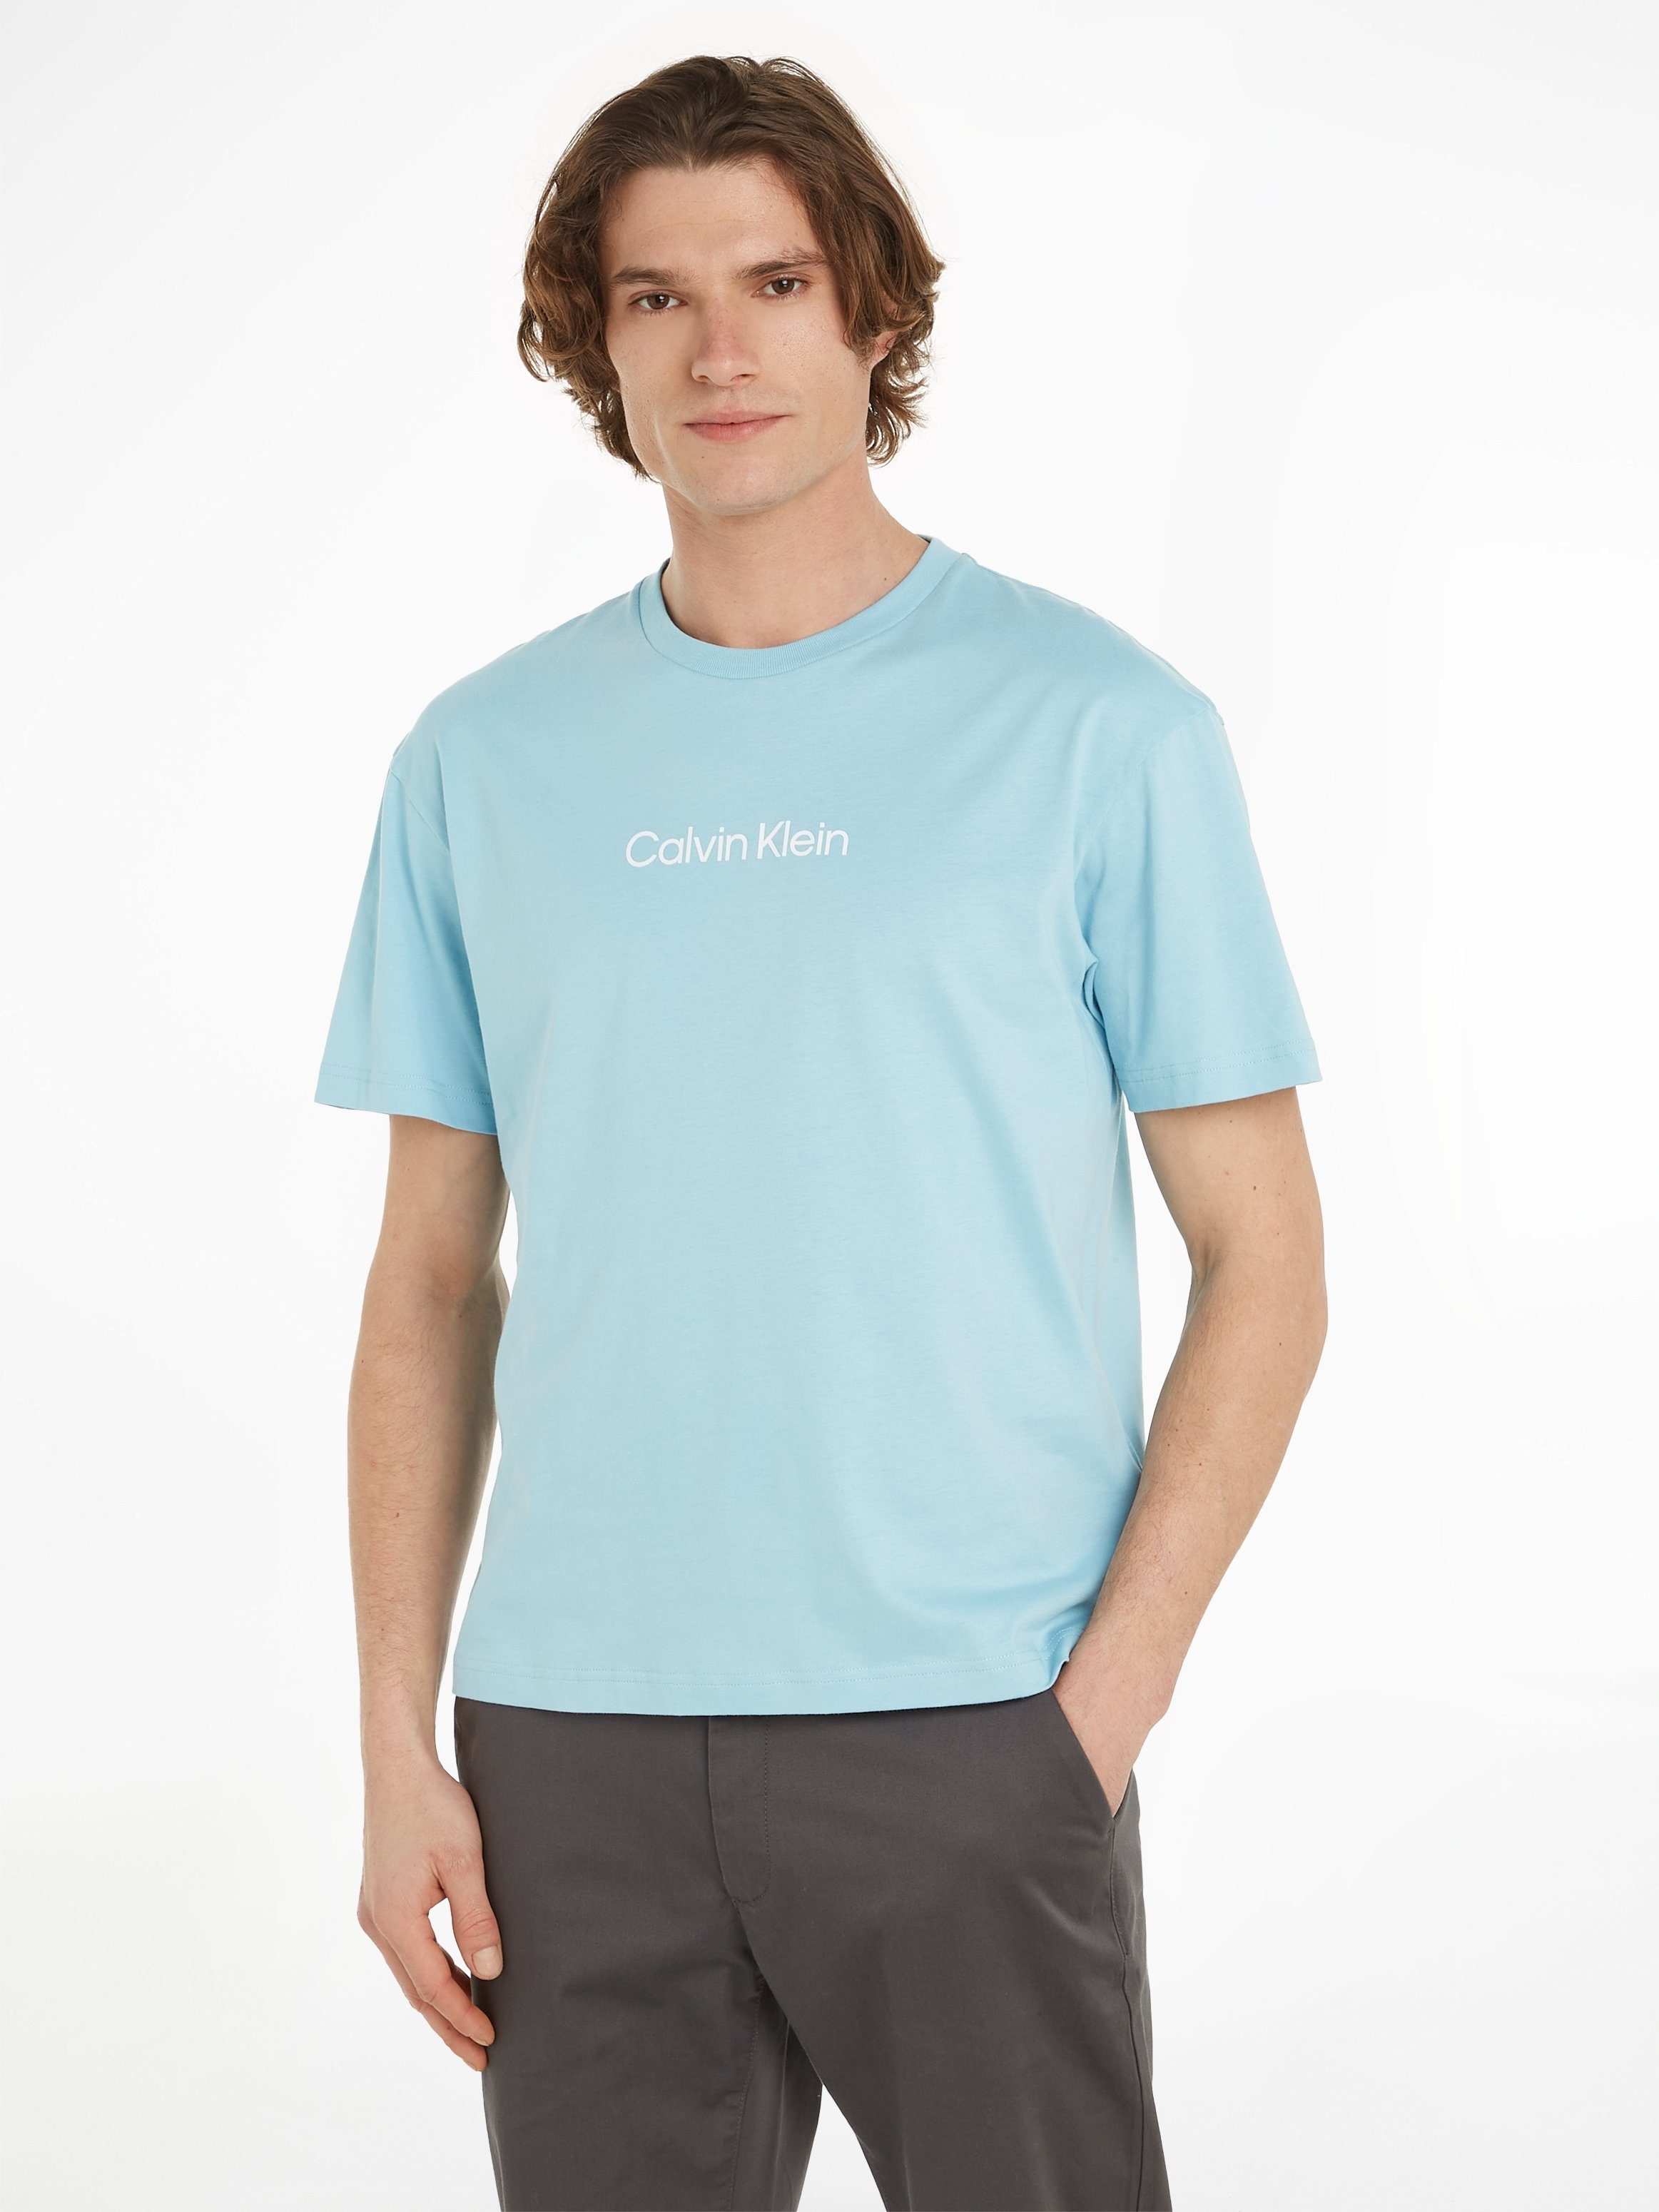 Calvin Klein T-Shirt T-SHIRT Tropic Markenlabel mit COMFORT LOGO aufgedrucktem Blue HERO